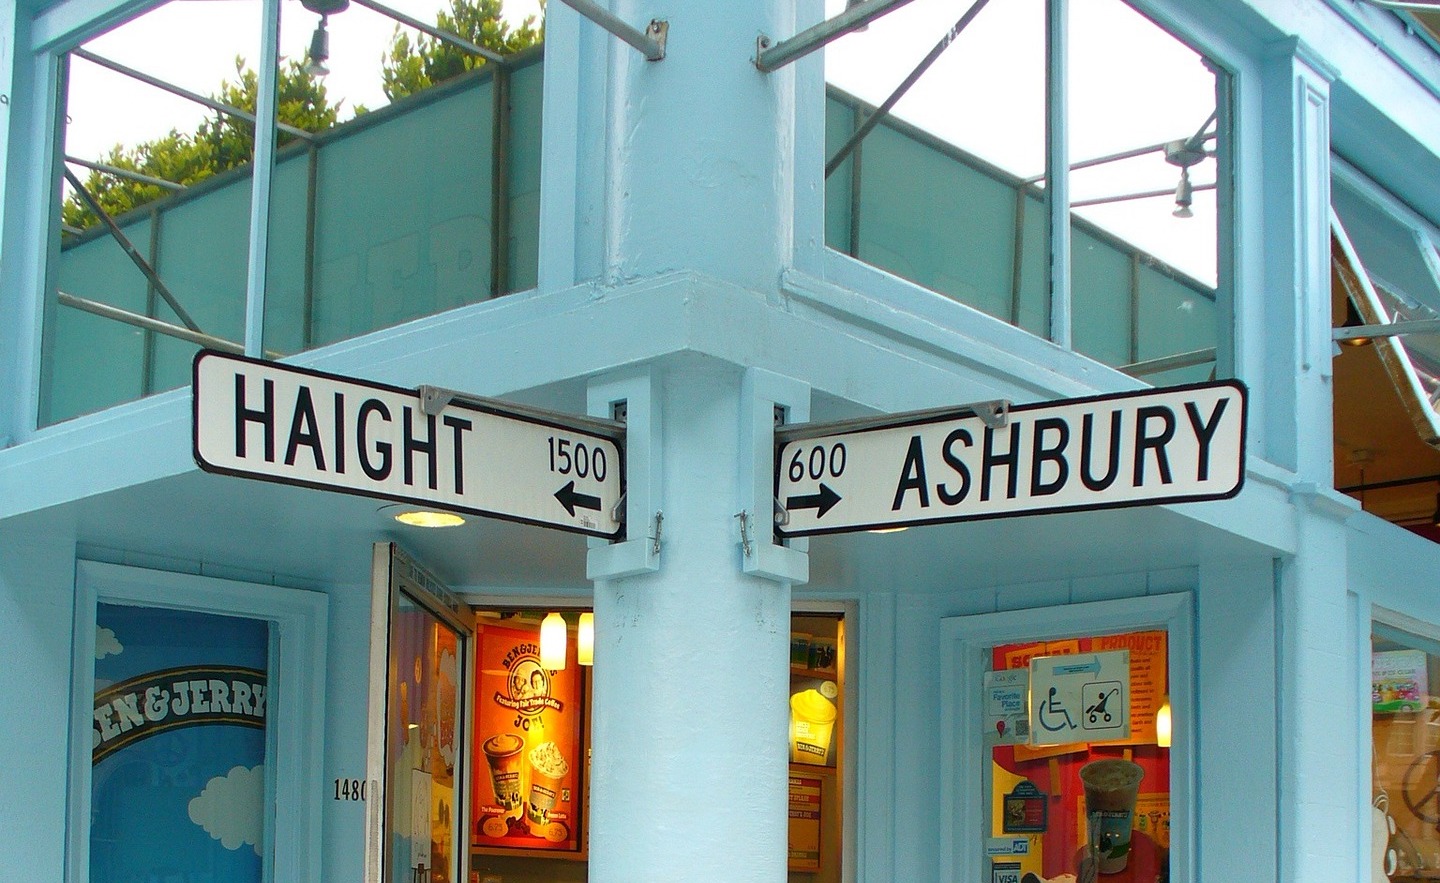 Ashbury-Haight Intersection